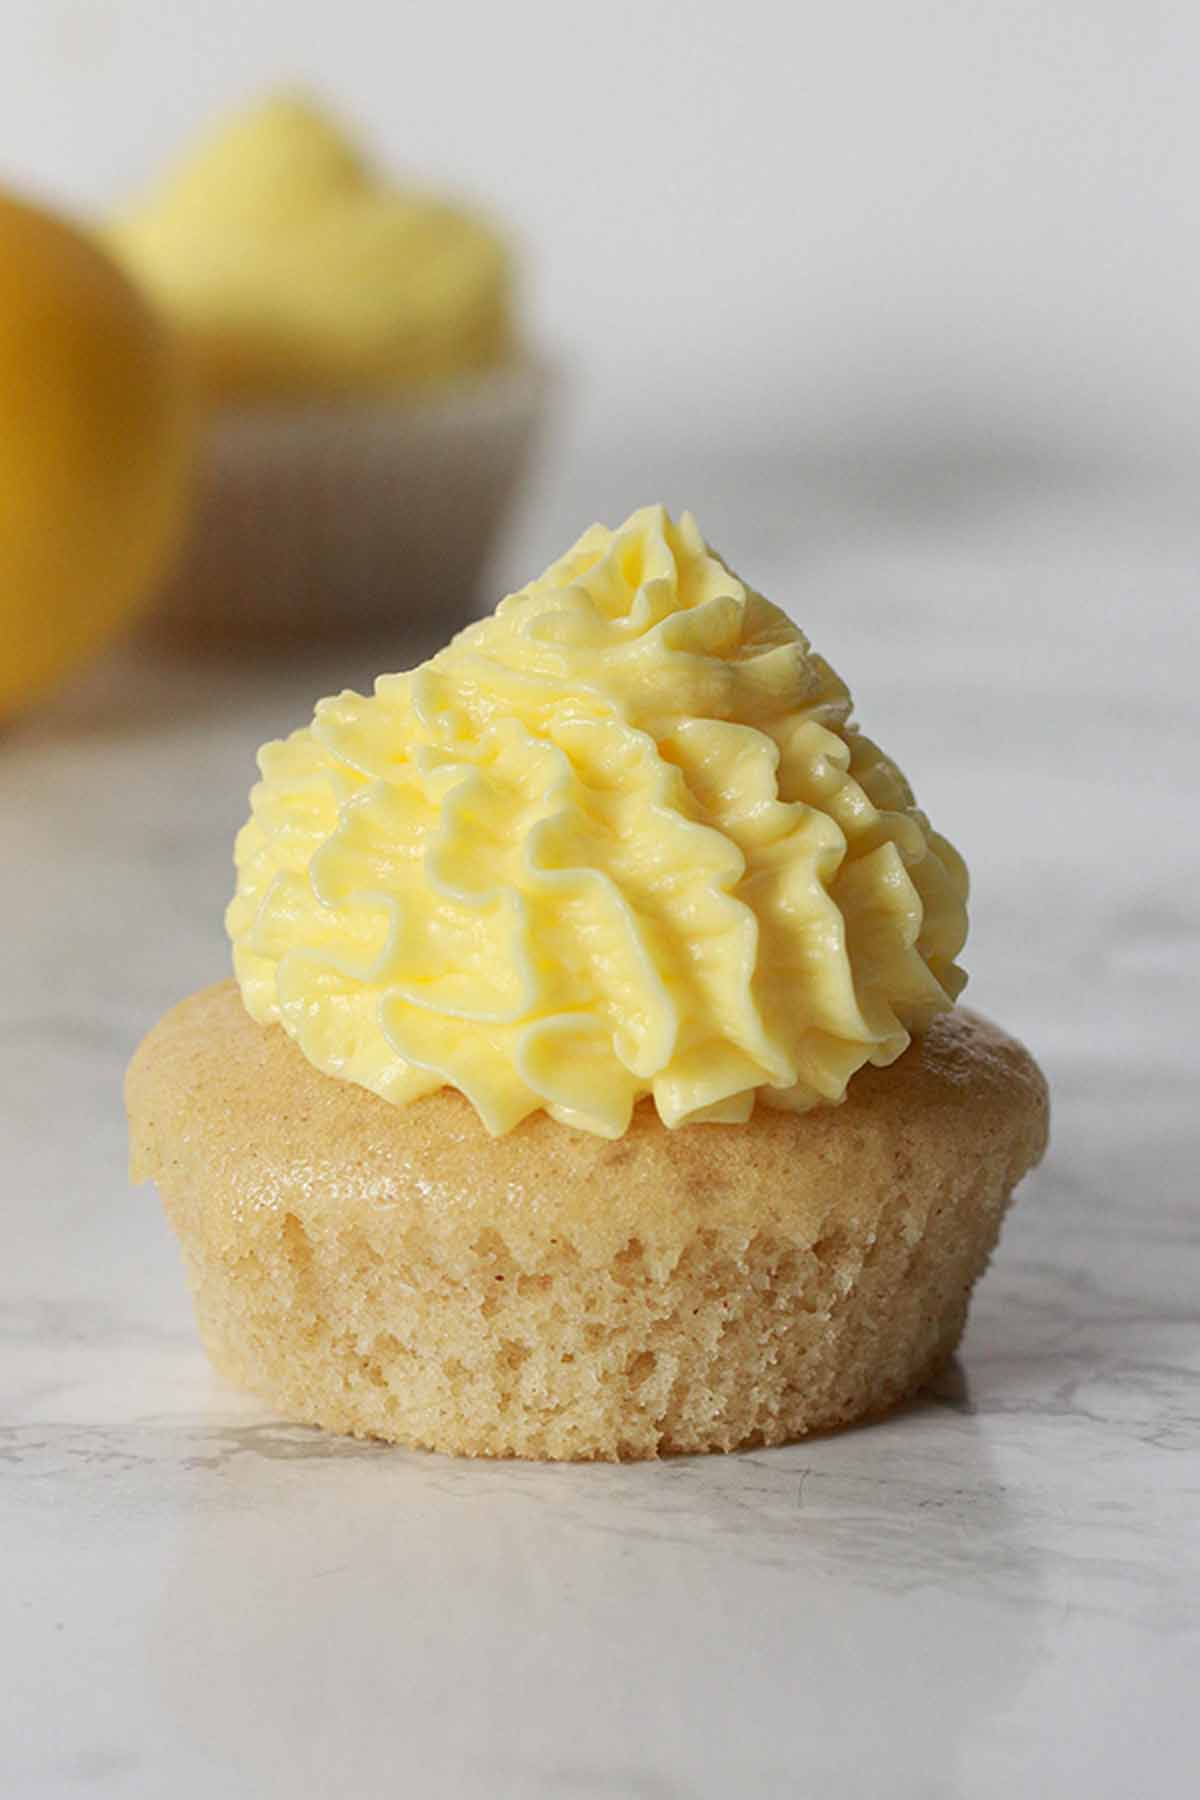 Cupcake With Lemon Buttercream On Top